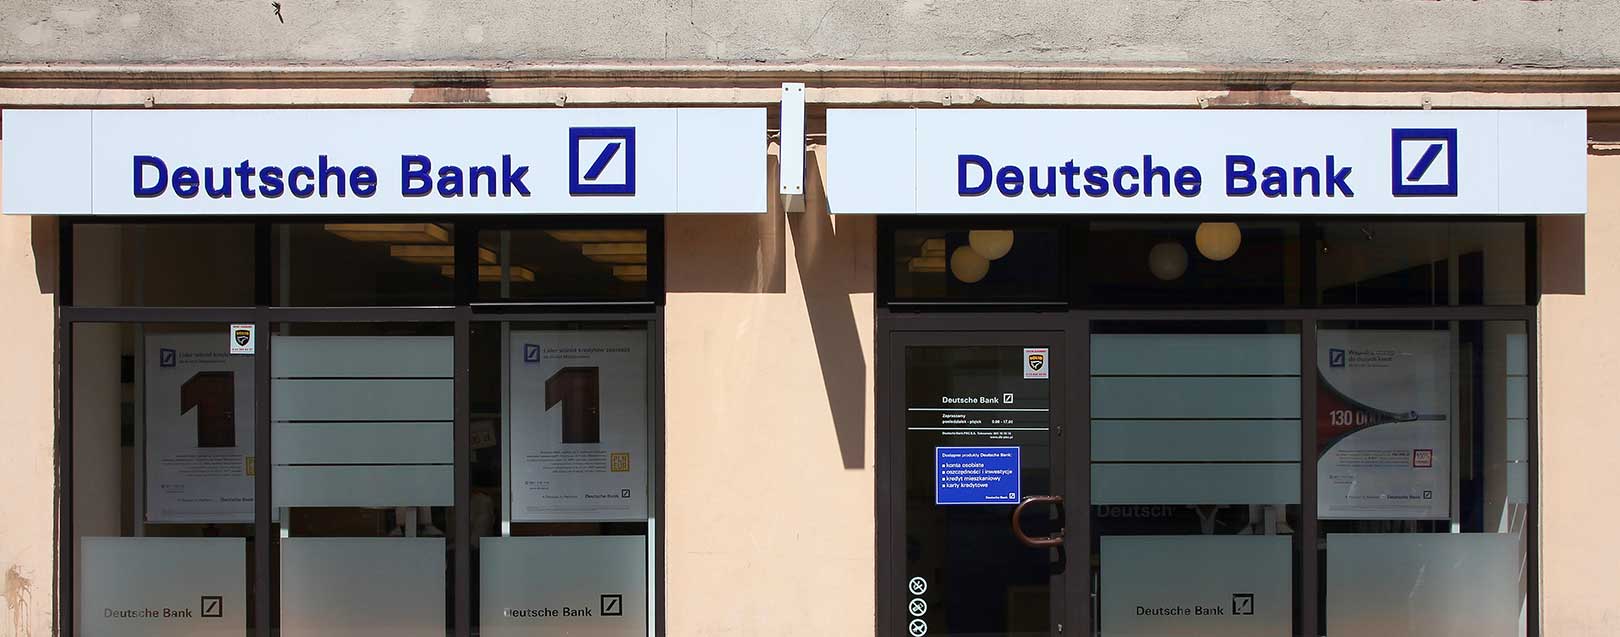 Deutsche Bank predicts GST implementation to be Apr 2018